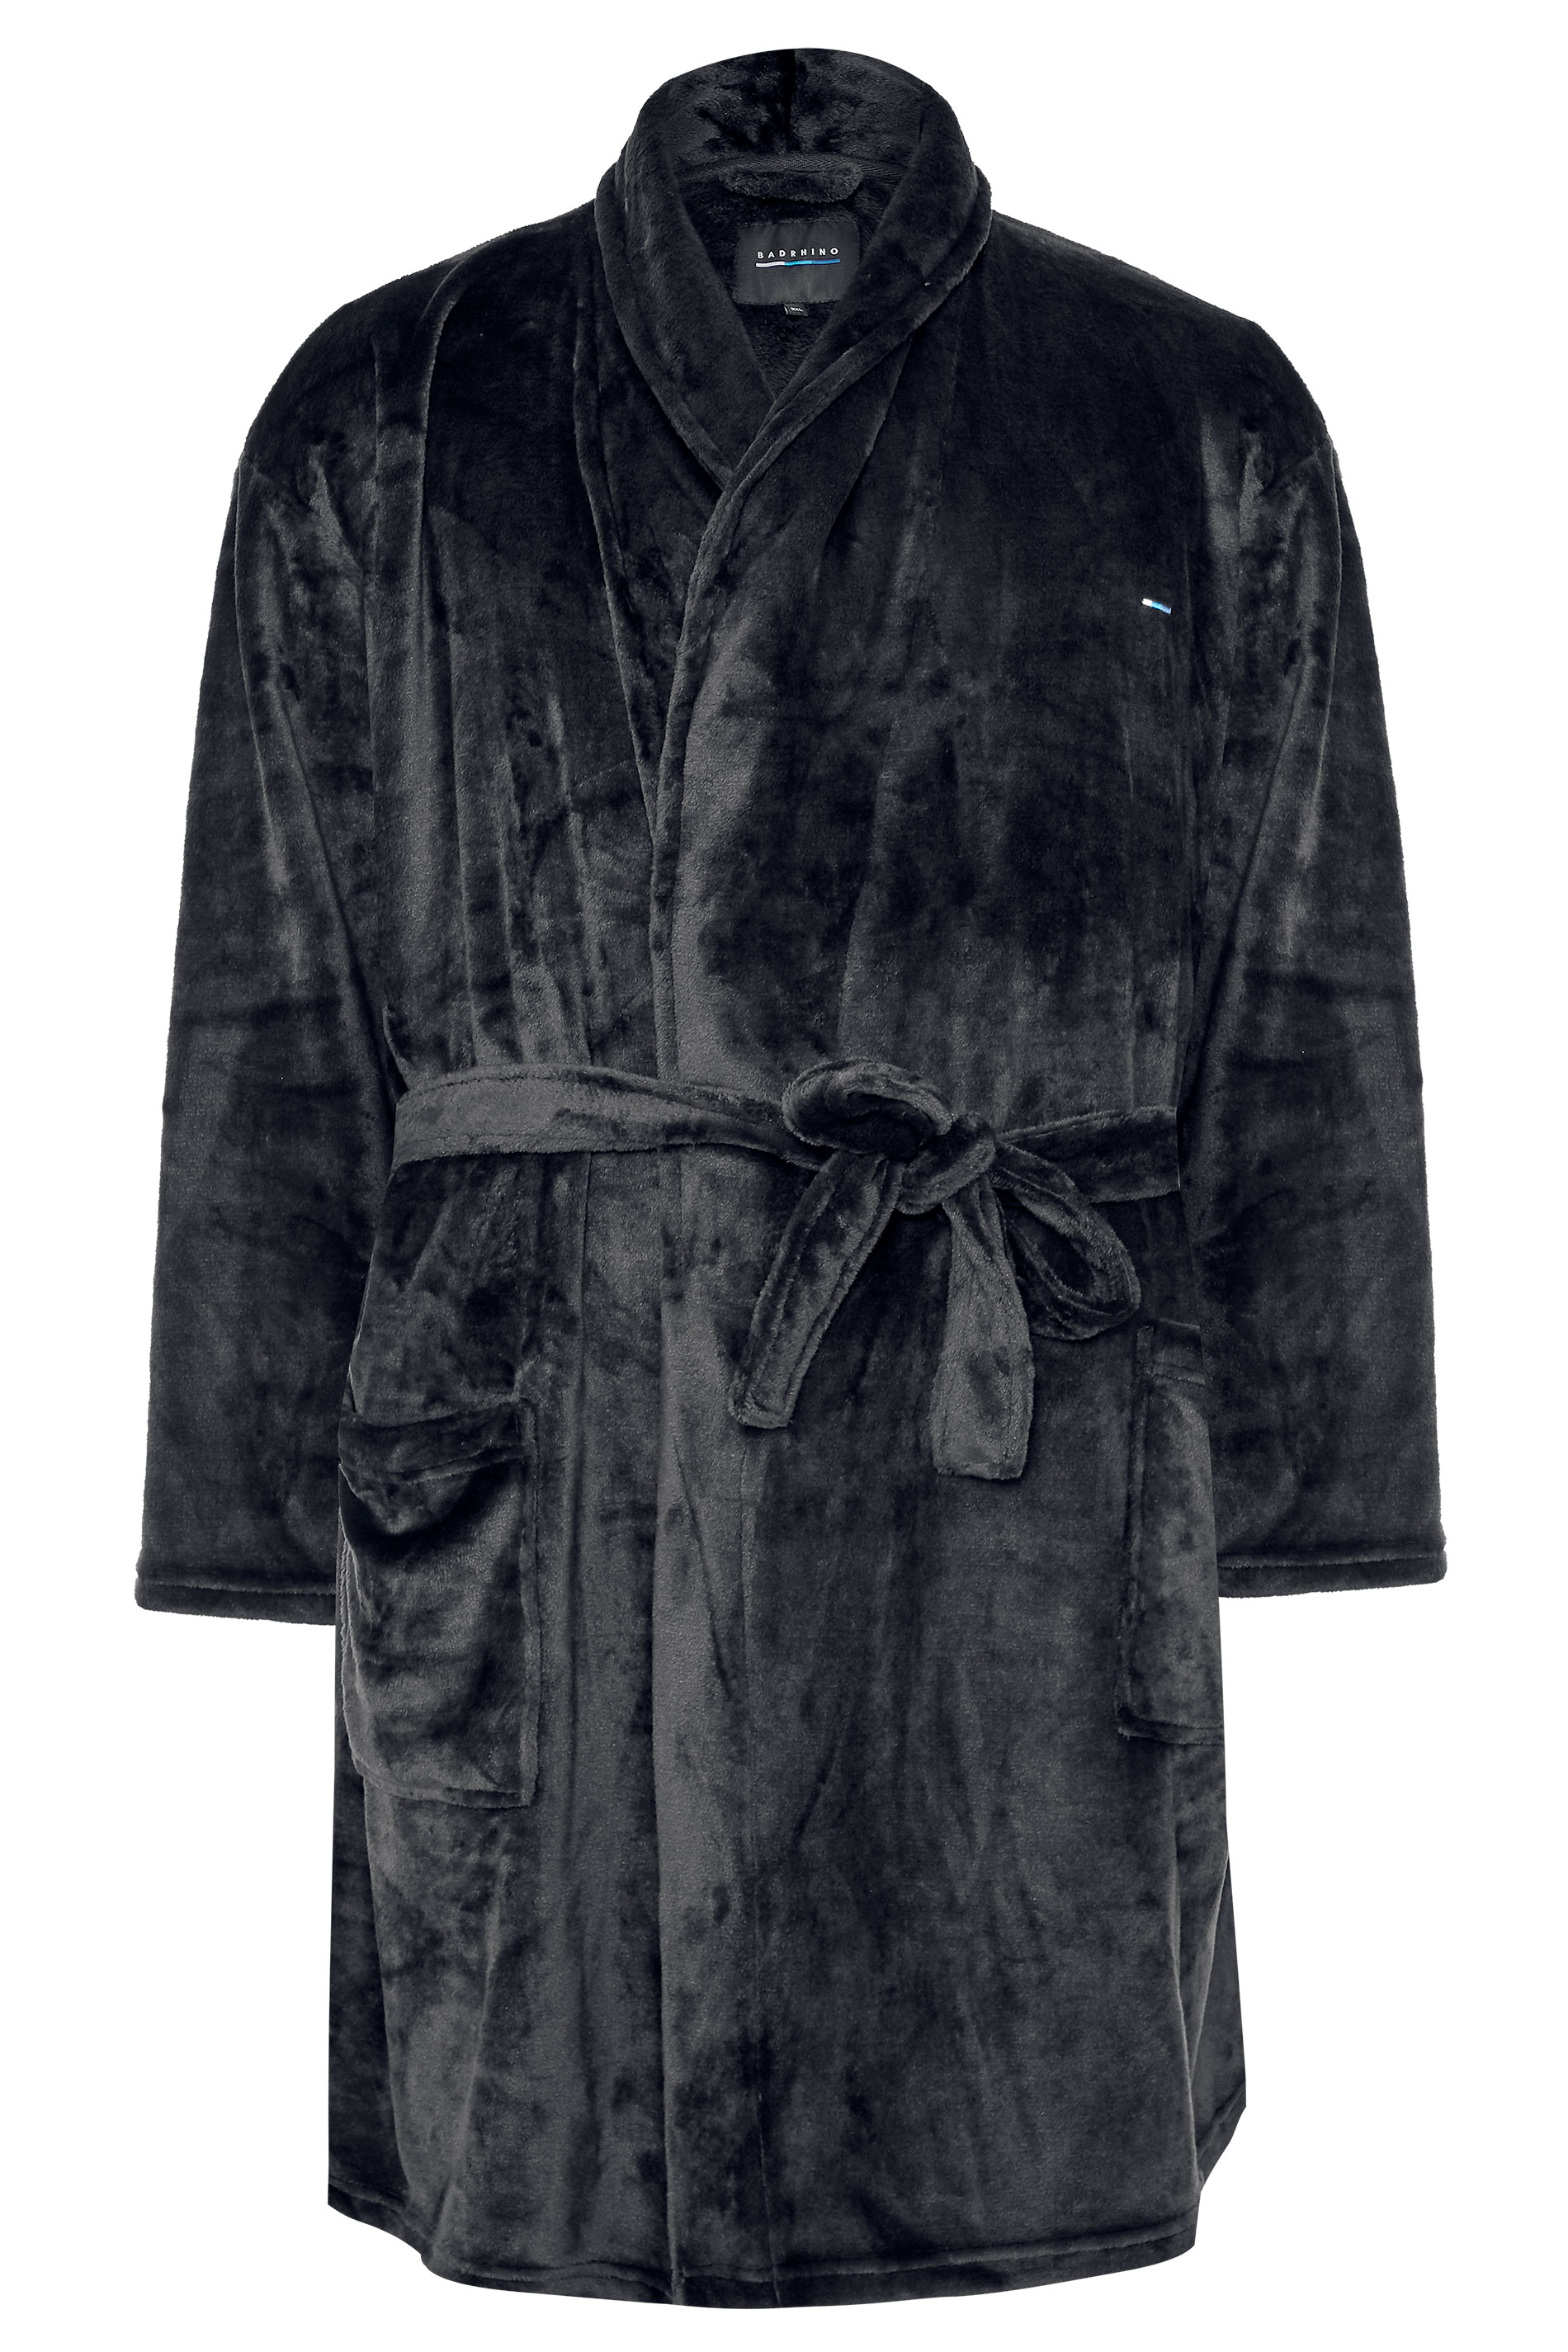 BadRhino Black Soft Dressing Gown | BadRhino 3